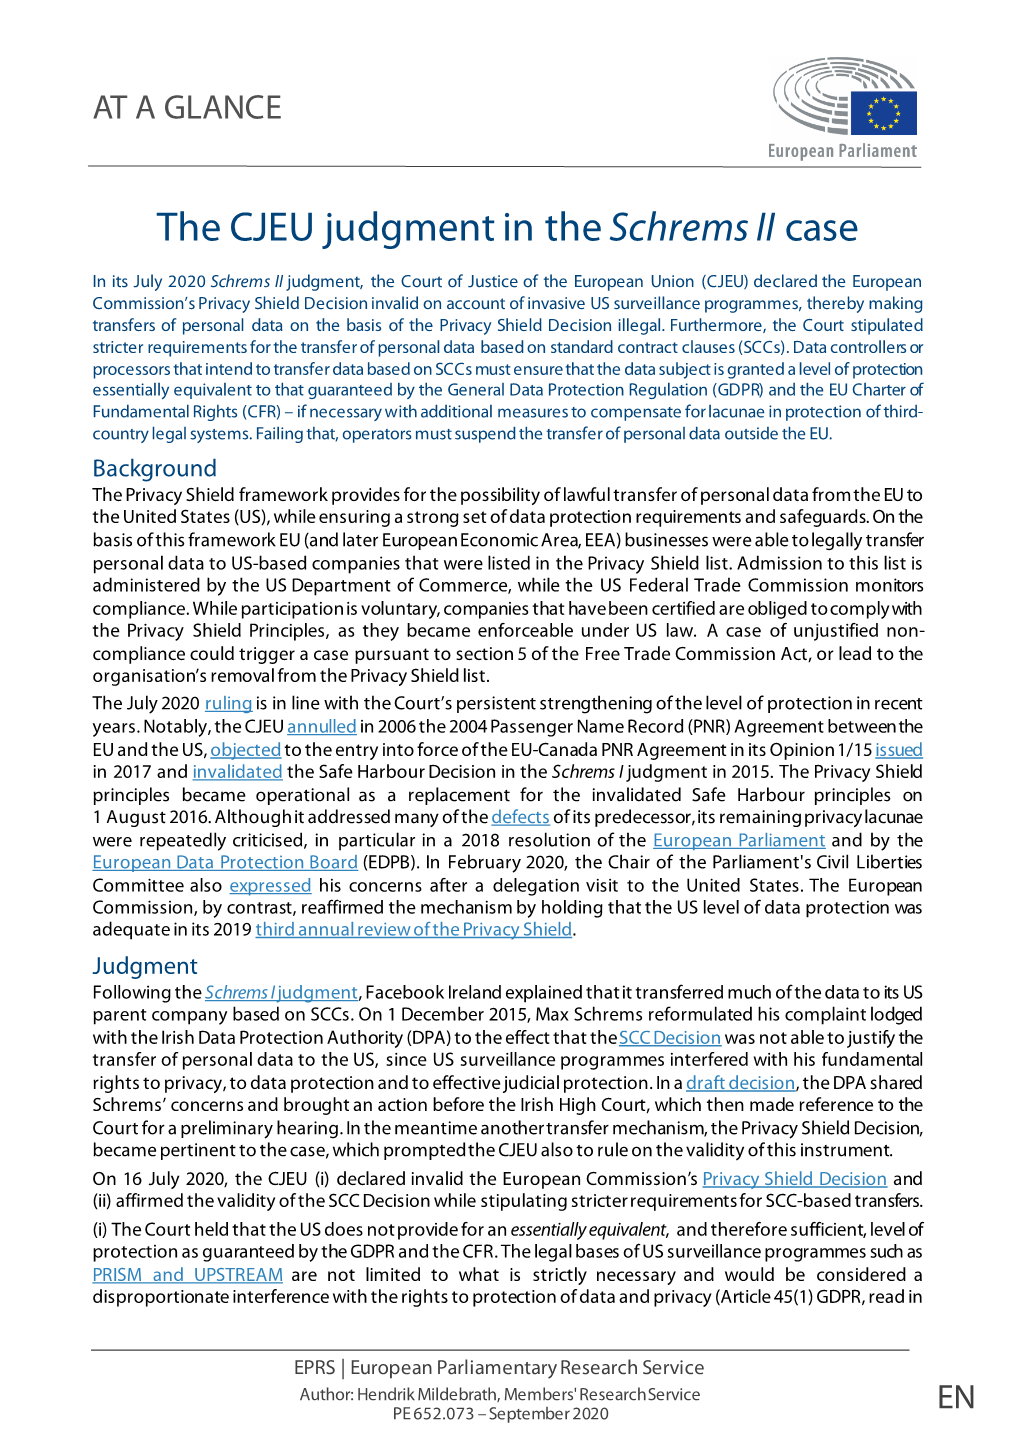 The CJEU Judgement in the Schrems II Case